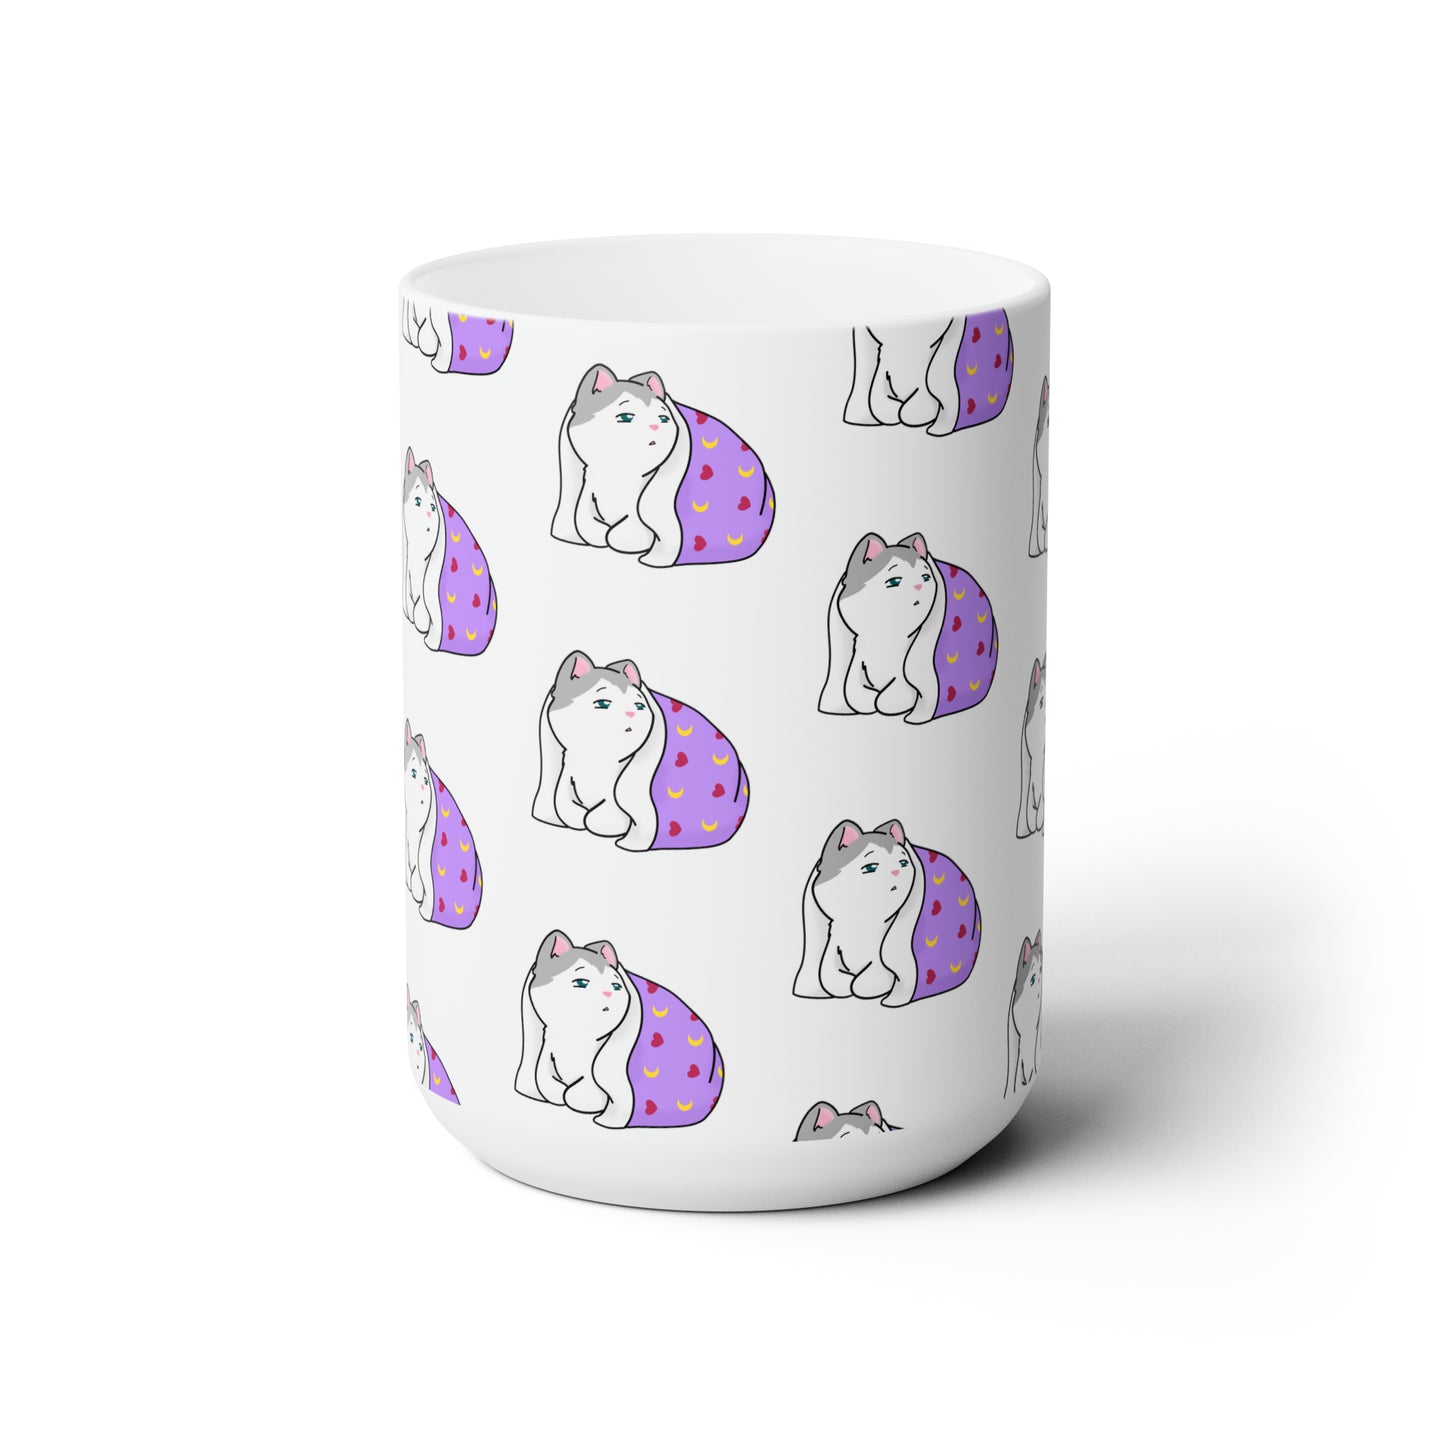 Sleepy Kitty Patterned White Ceramic Mug 15oz